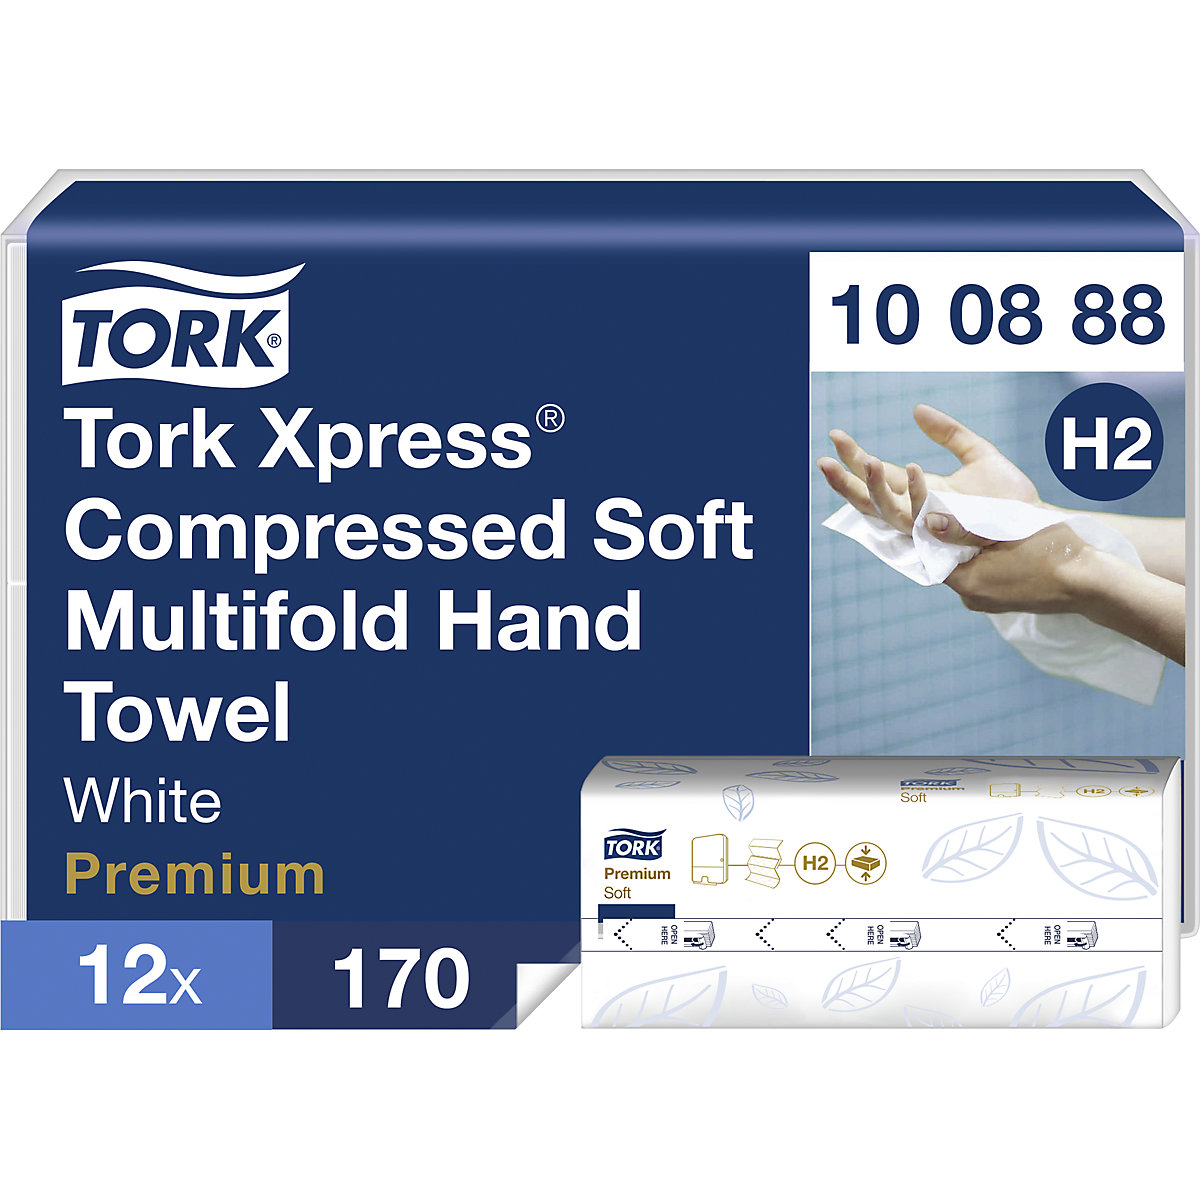 Komprimirani višestruki papirnati ručnici Xpress - TORK